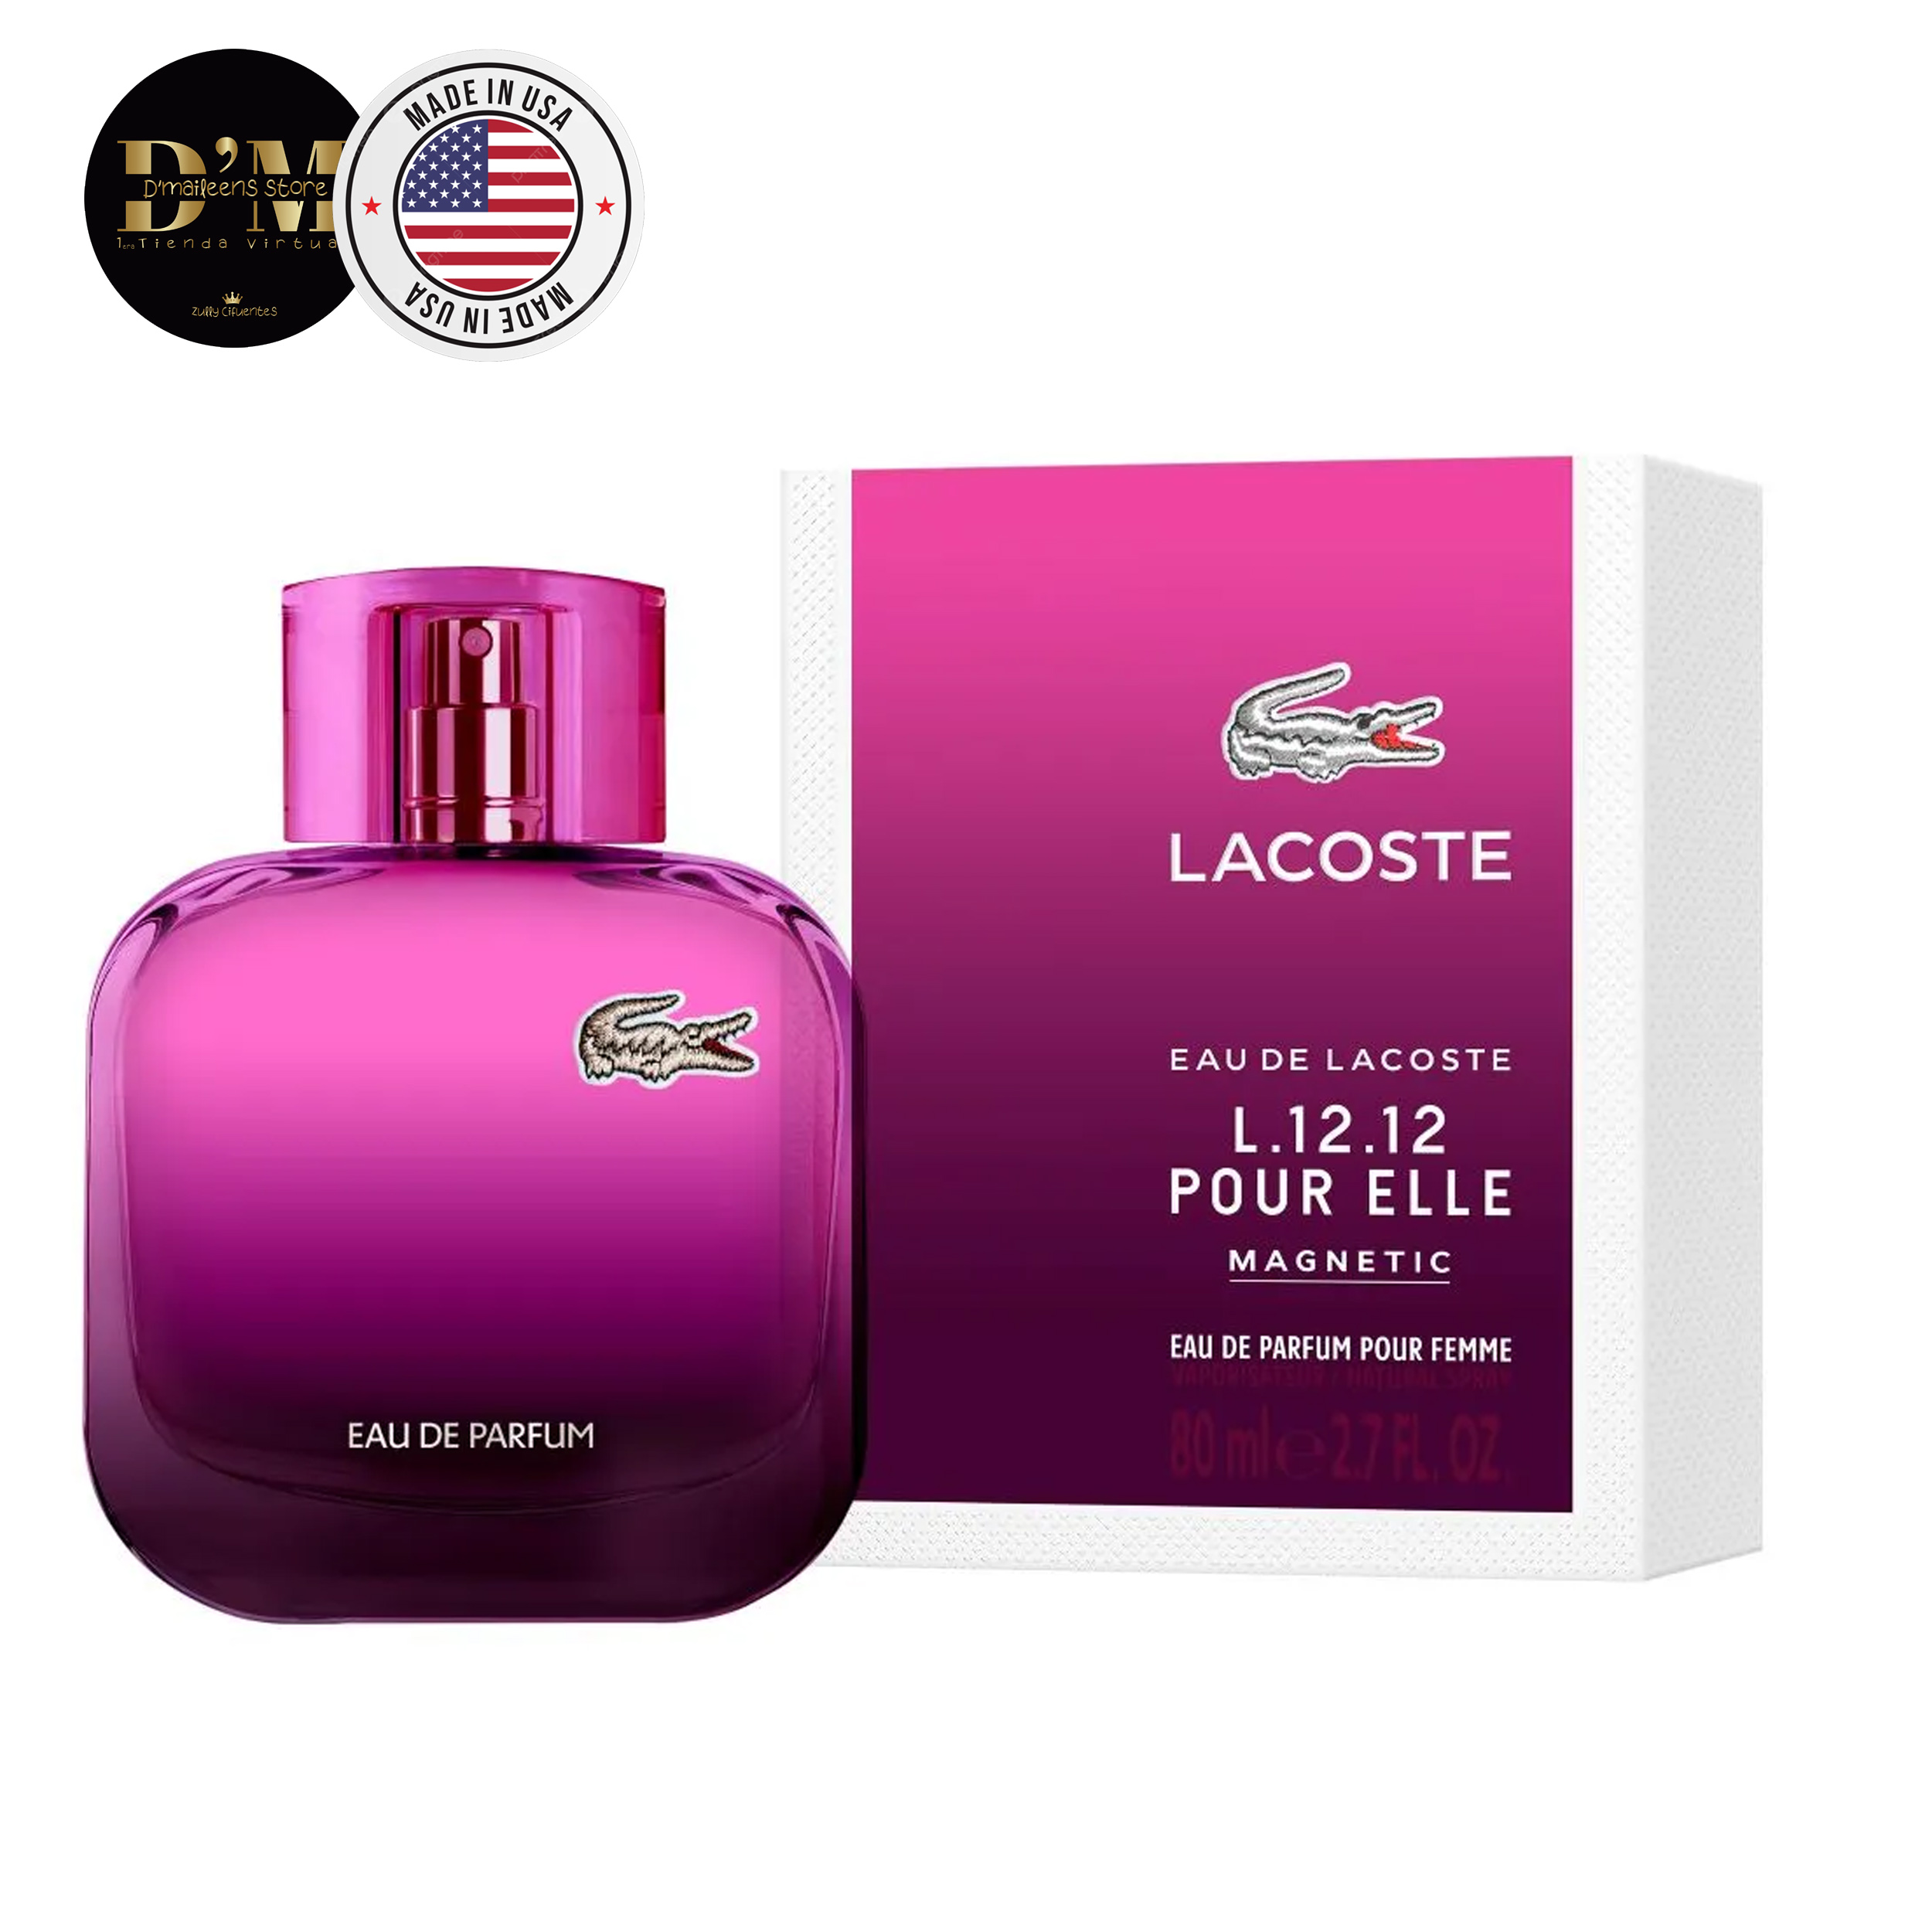 Perfume Eau De Lacoste L.12.12 Pour Elle Magnetic Lacoste Fragrances    (Replica Con Fragancia Importada)- Mujer